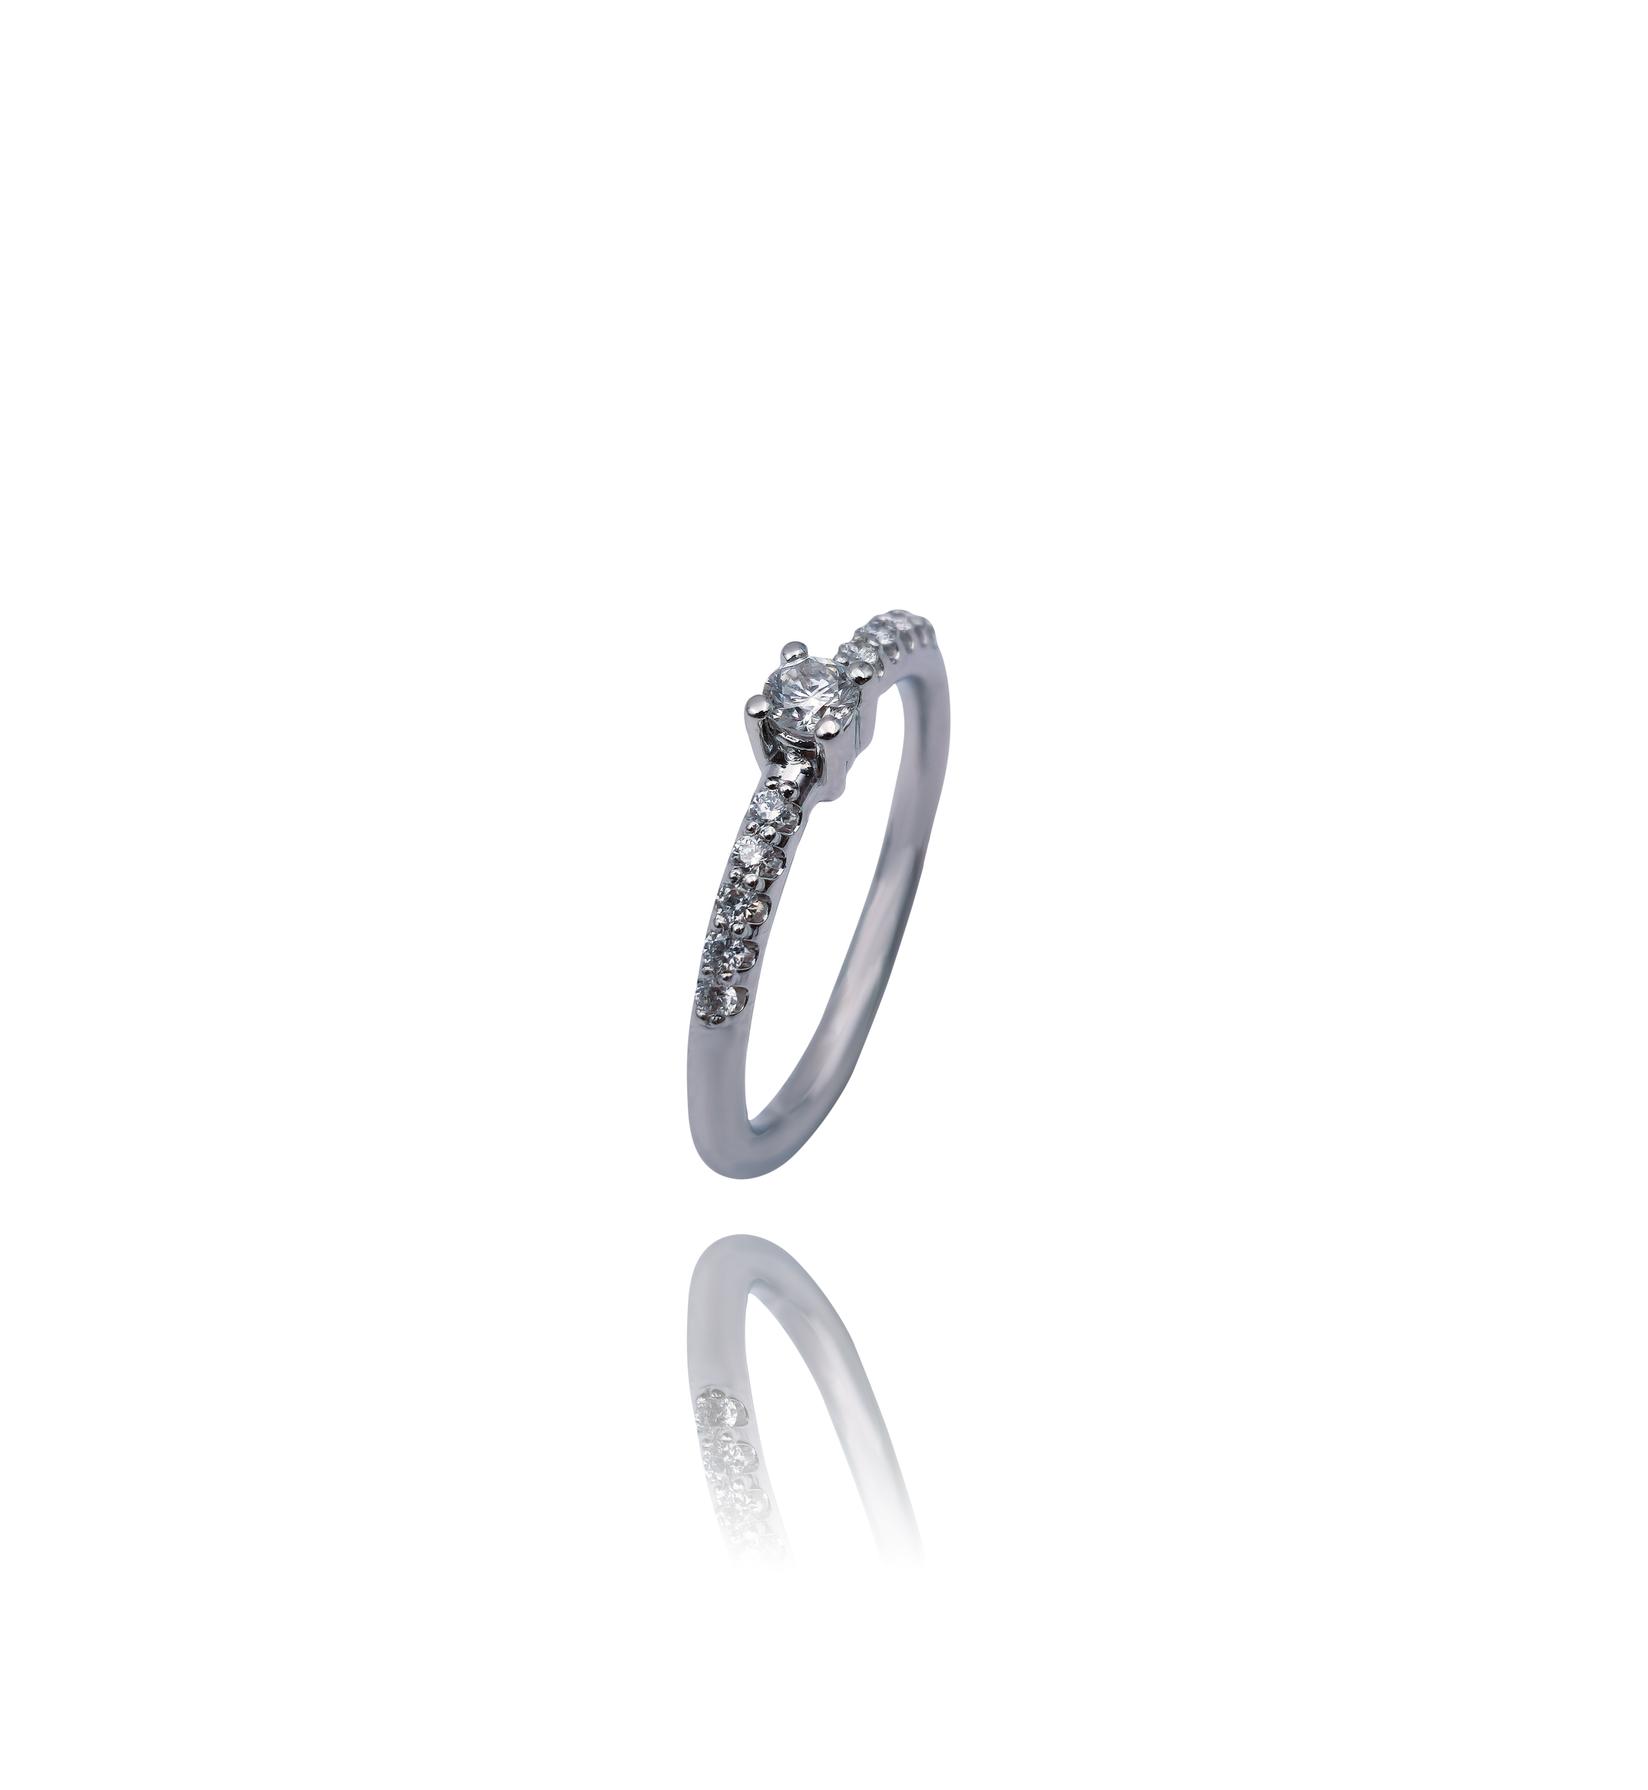 Selected image for Ženski prsten od Belog zlata sa Brilijantima, 585, 13mm